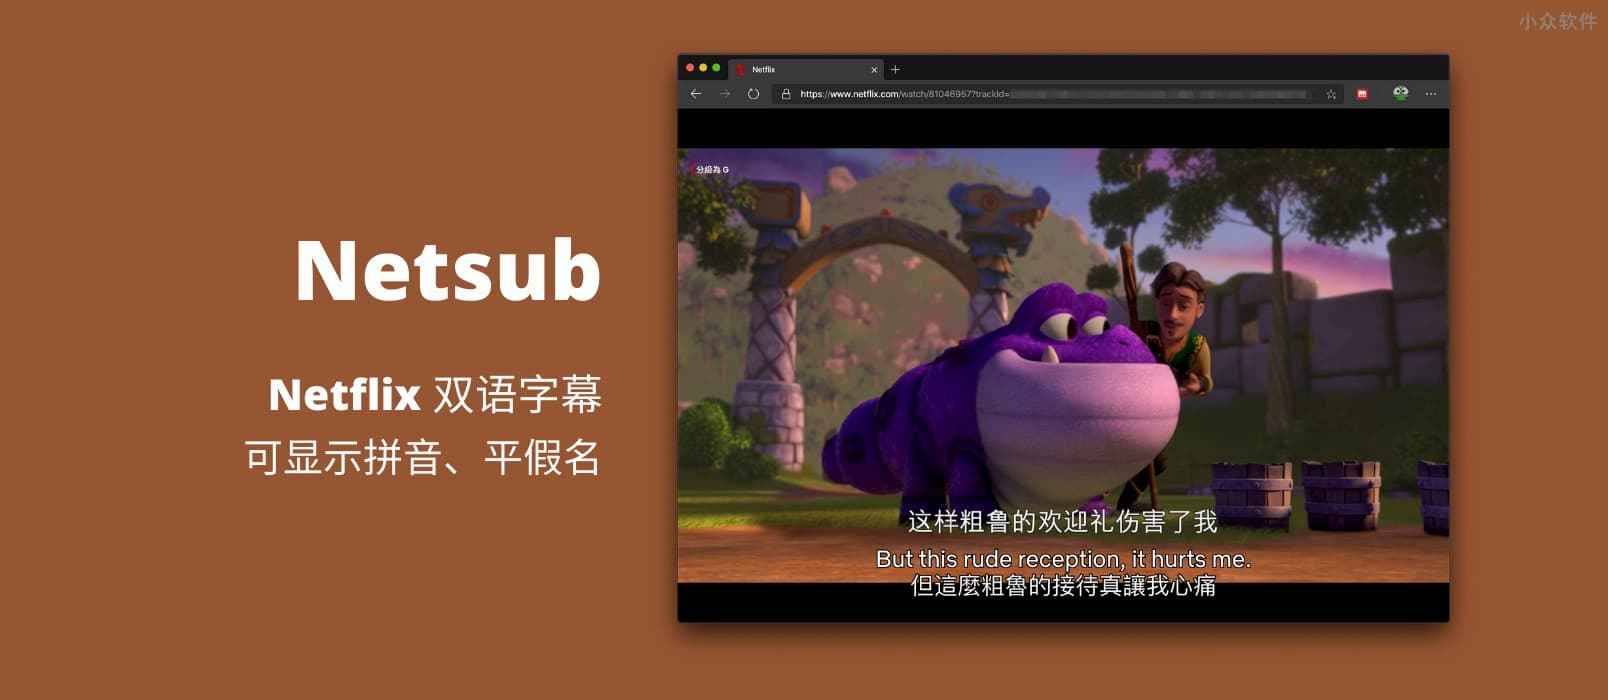 Netsub - 为 Netflix 显示双语字幕，并可显示拼音、平假名用来学习中文、日语[Chrome/Edge] 1